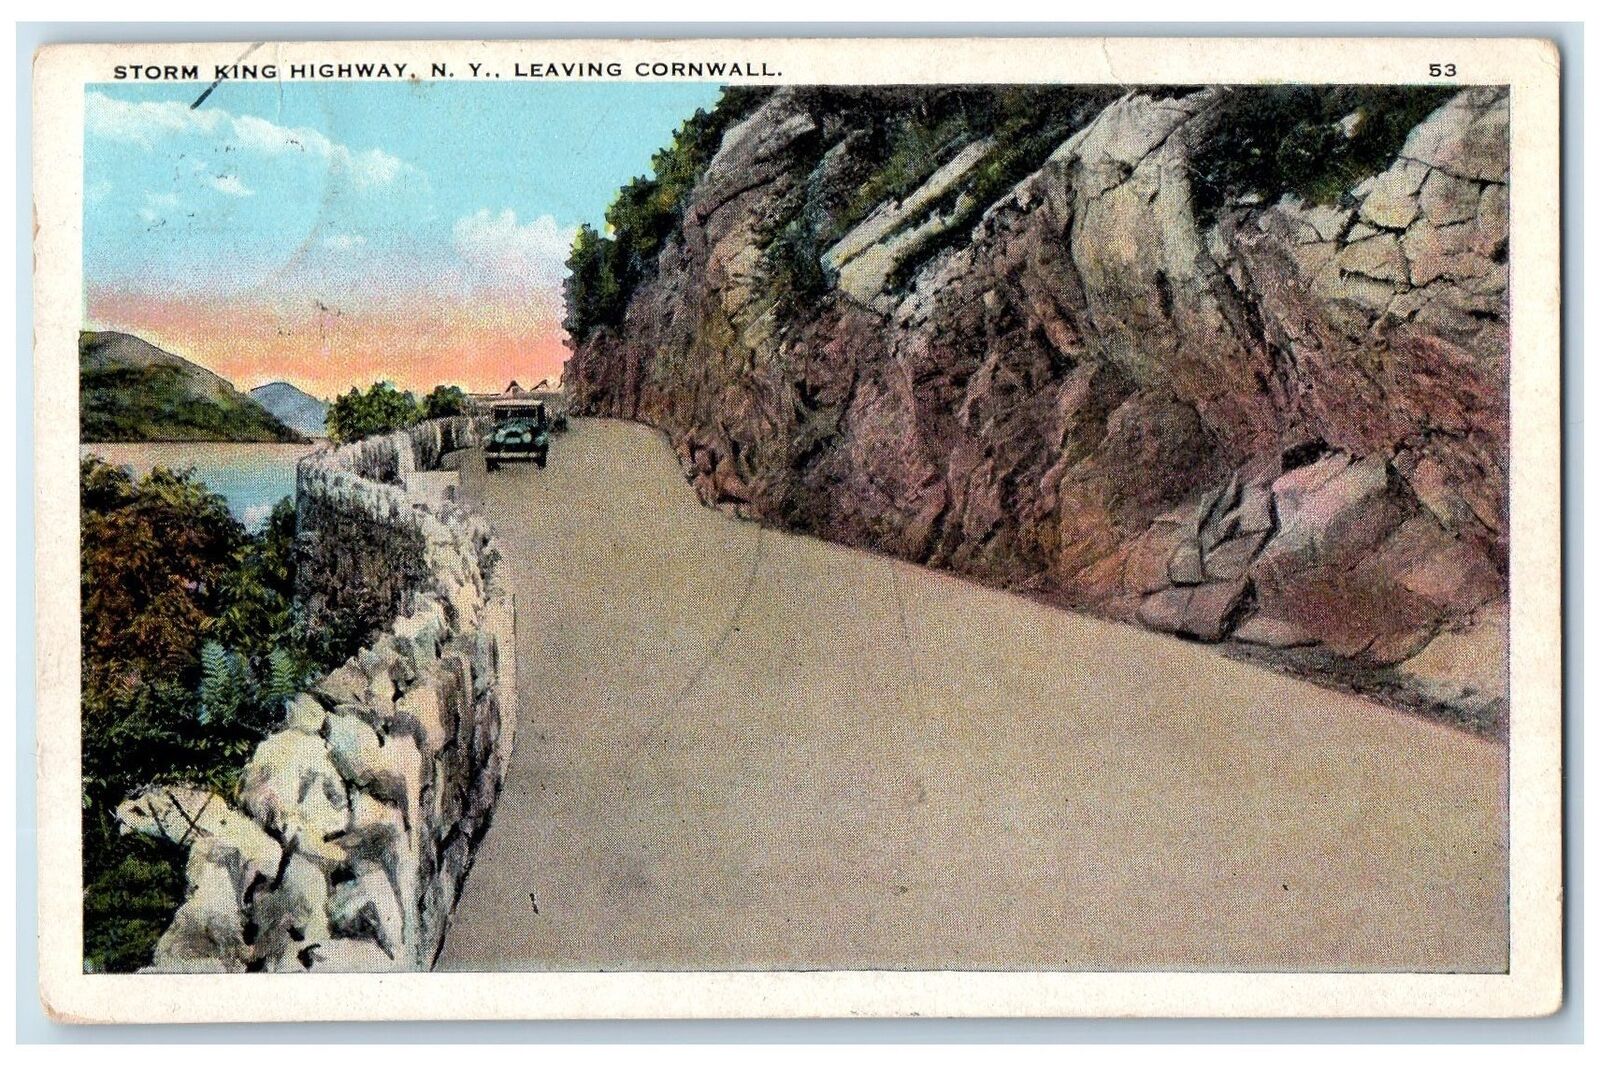 1920 Strom King Highway New York Leaving Cornwall NY, Car Street View Postcard